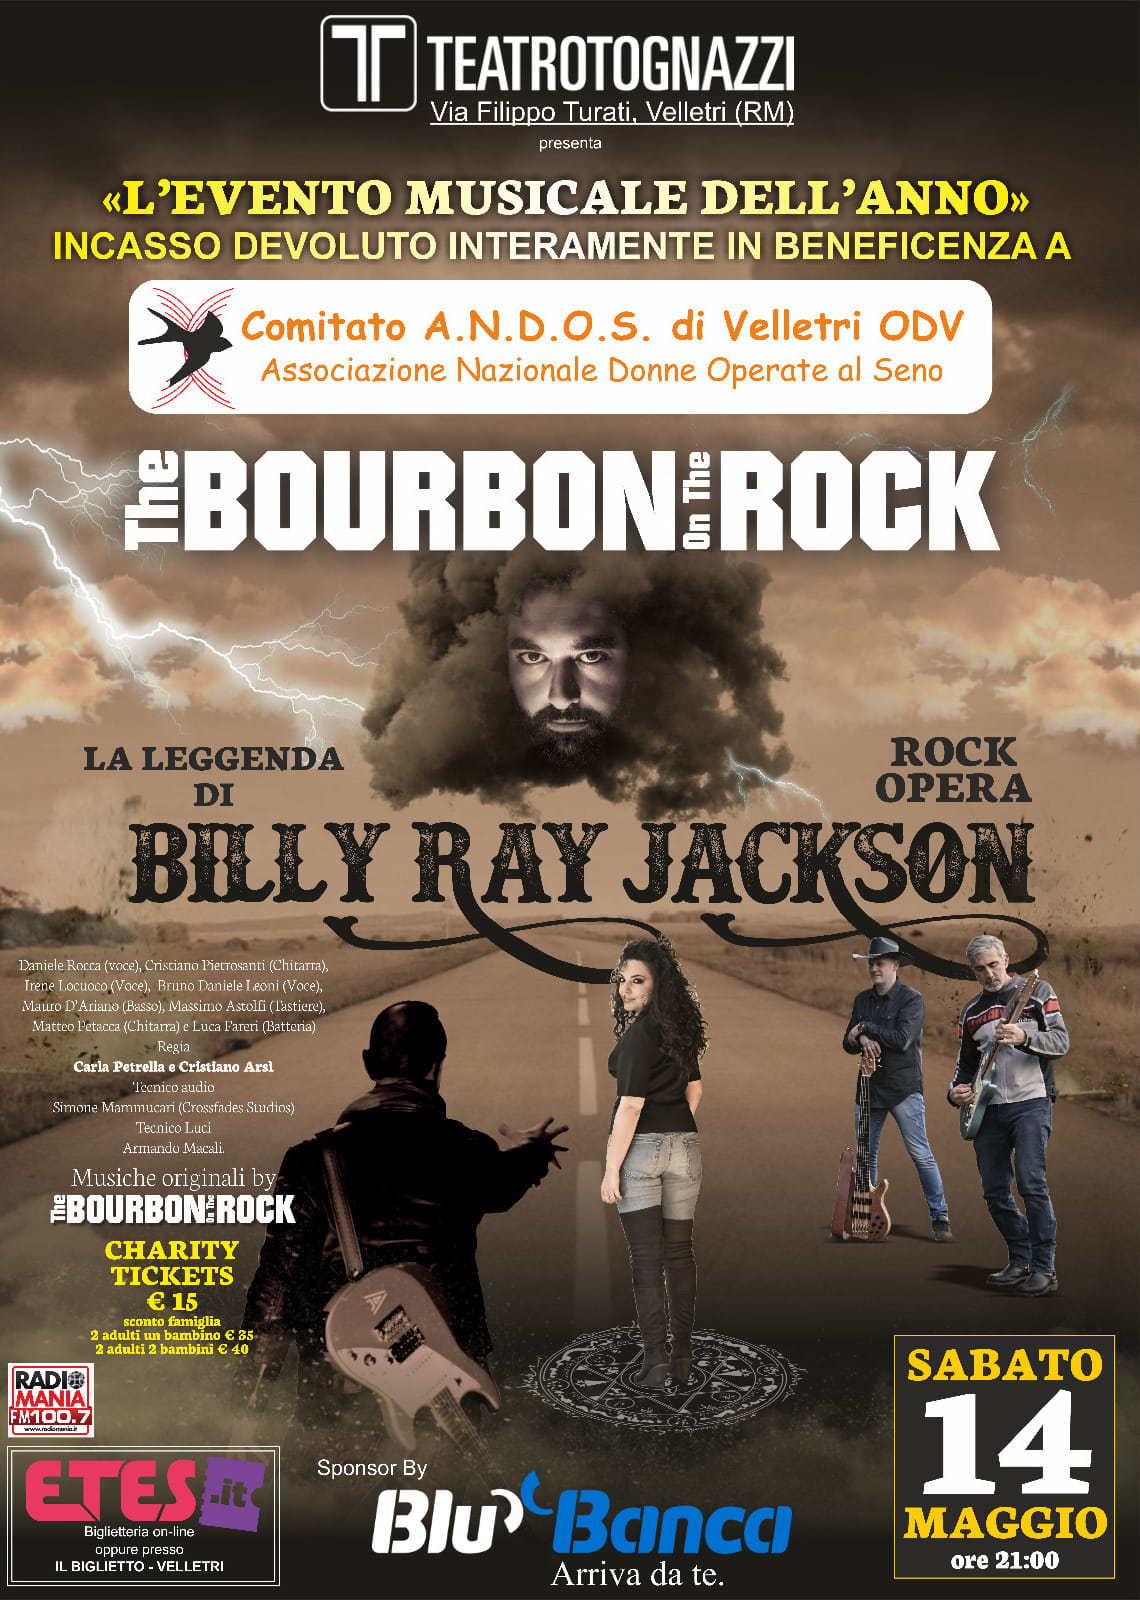 La Leggenda di Billy Ray Jackson per Andos Velletri